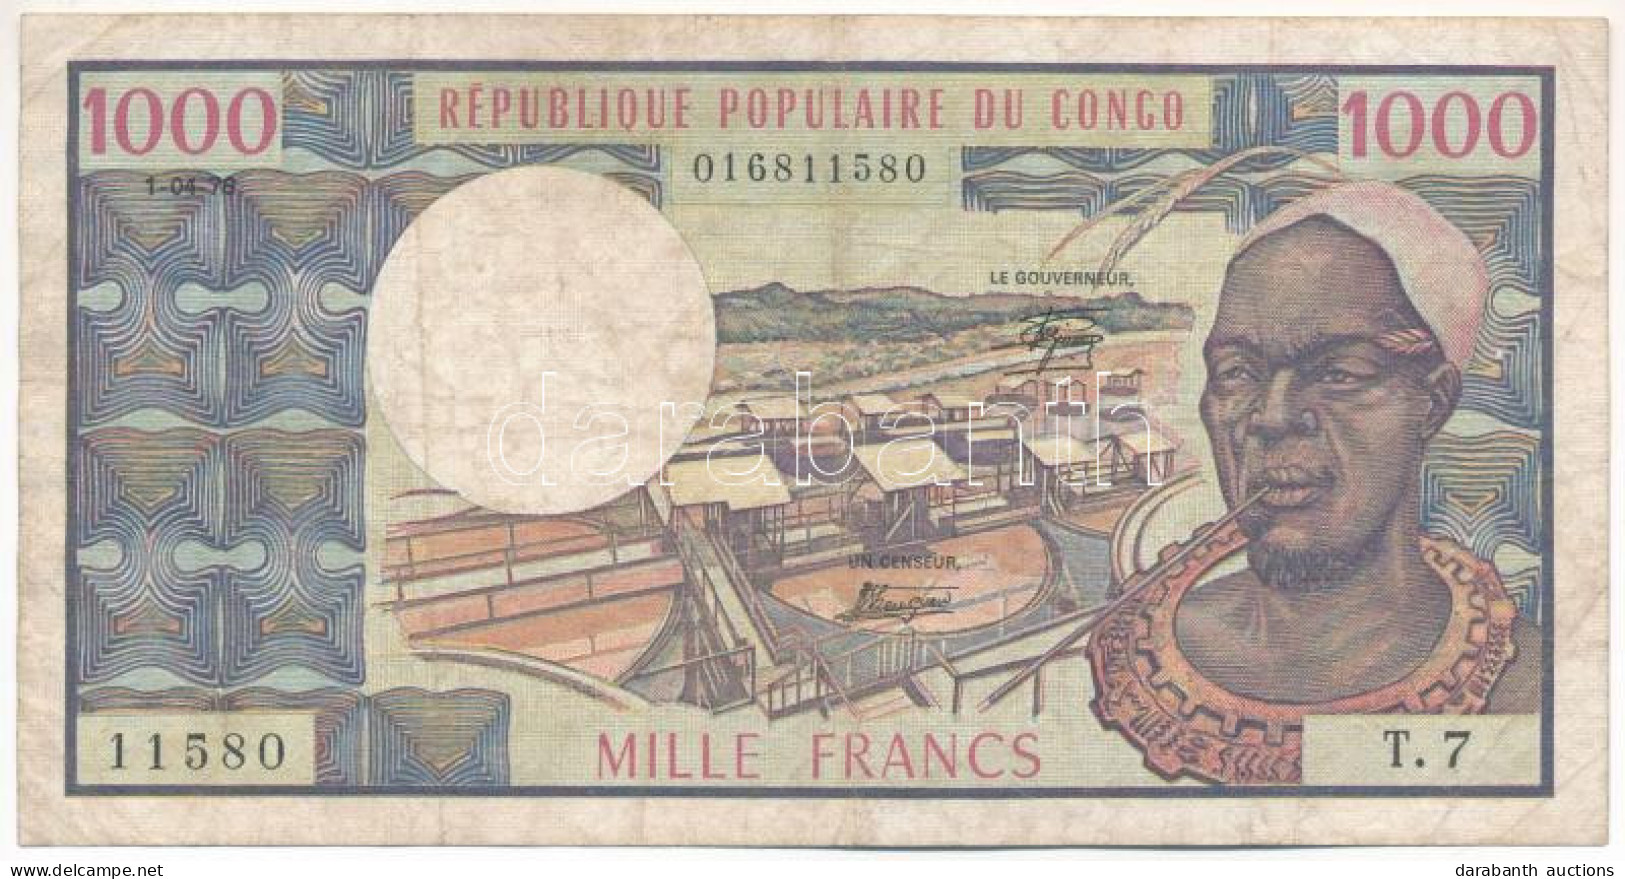 Kongó DN (1978) 1000Fr "T.7 11580" T:F Congo ND (1978) 1000 Francs "T.7 11580" C:F Krause P#3 - Unclassified